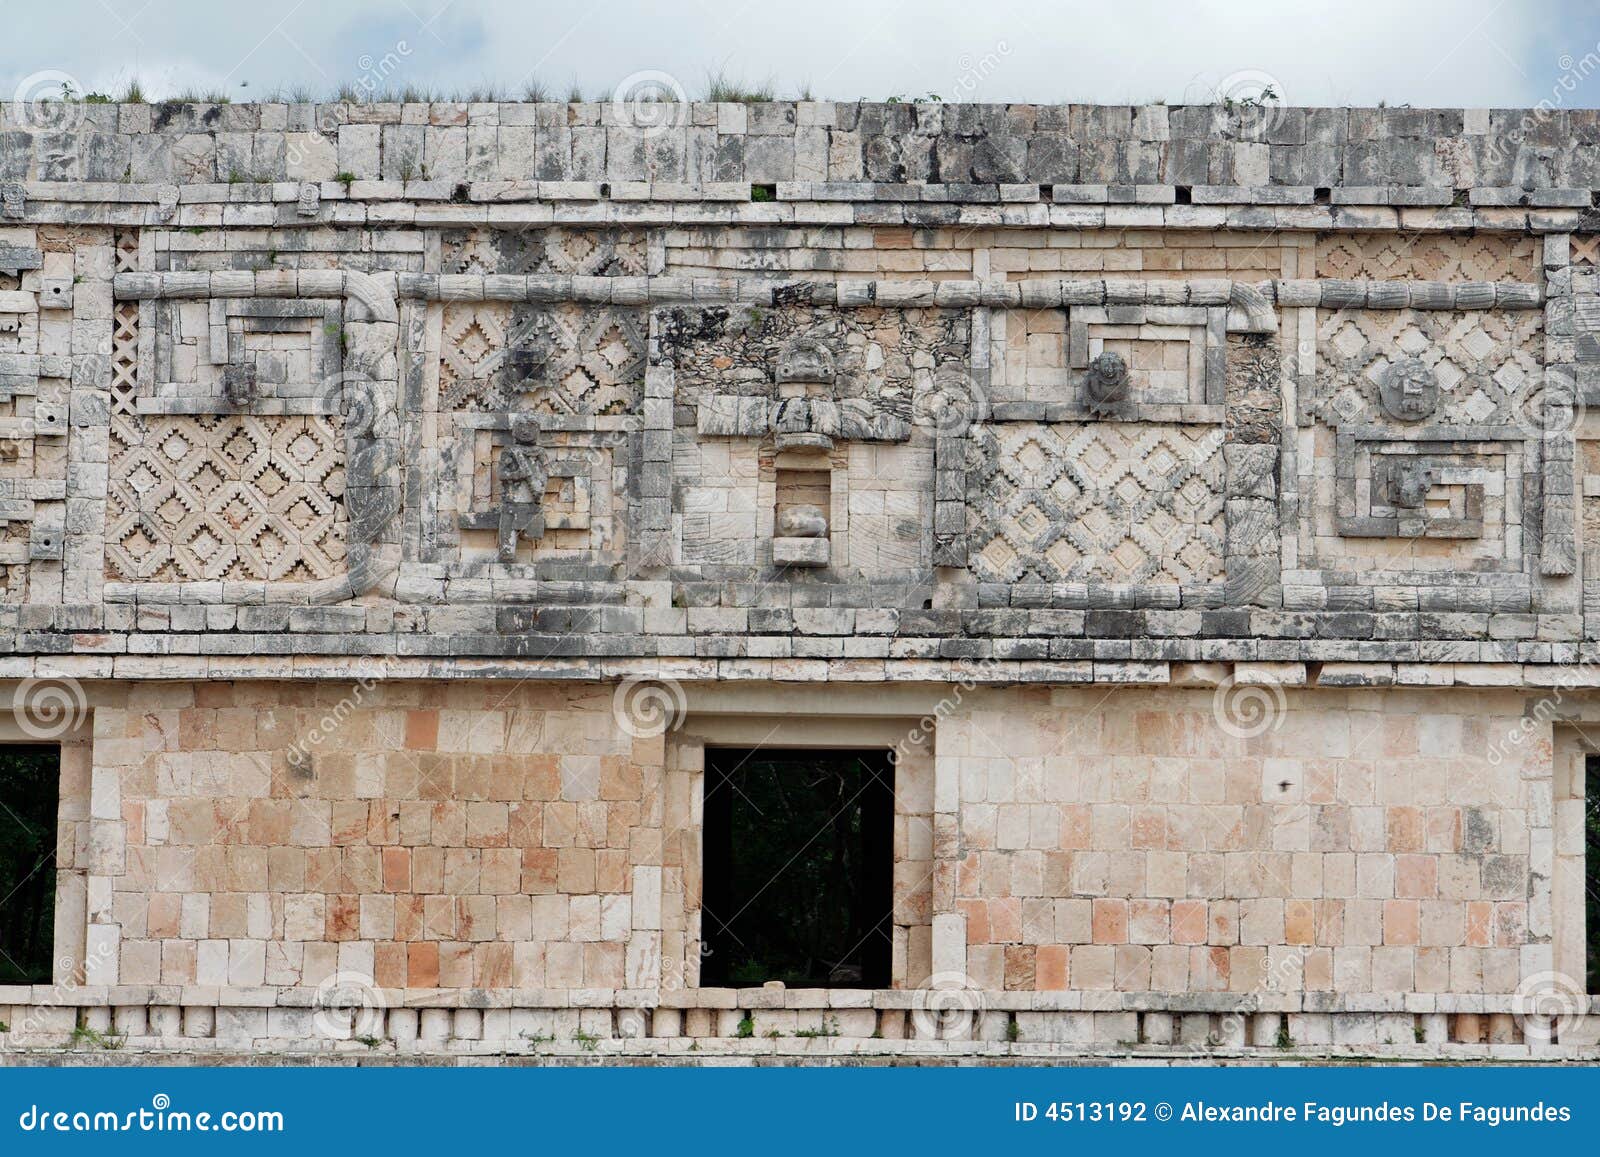 uxmal carved wall yucatan mexico